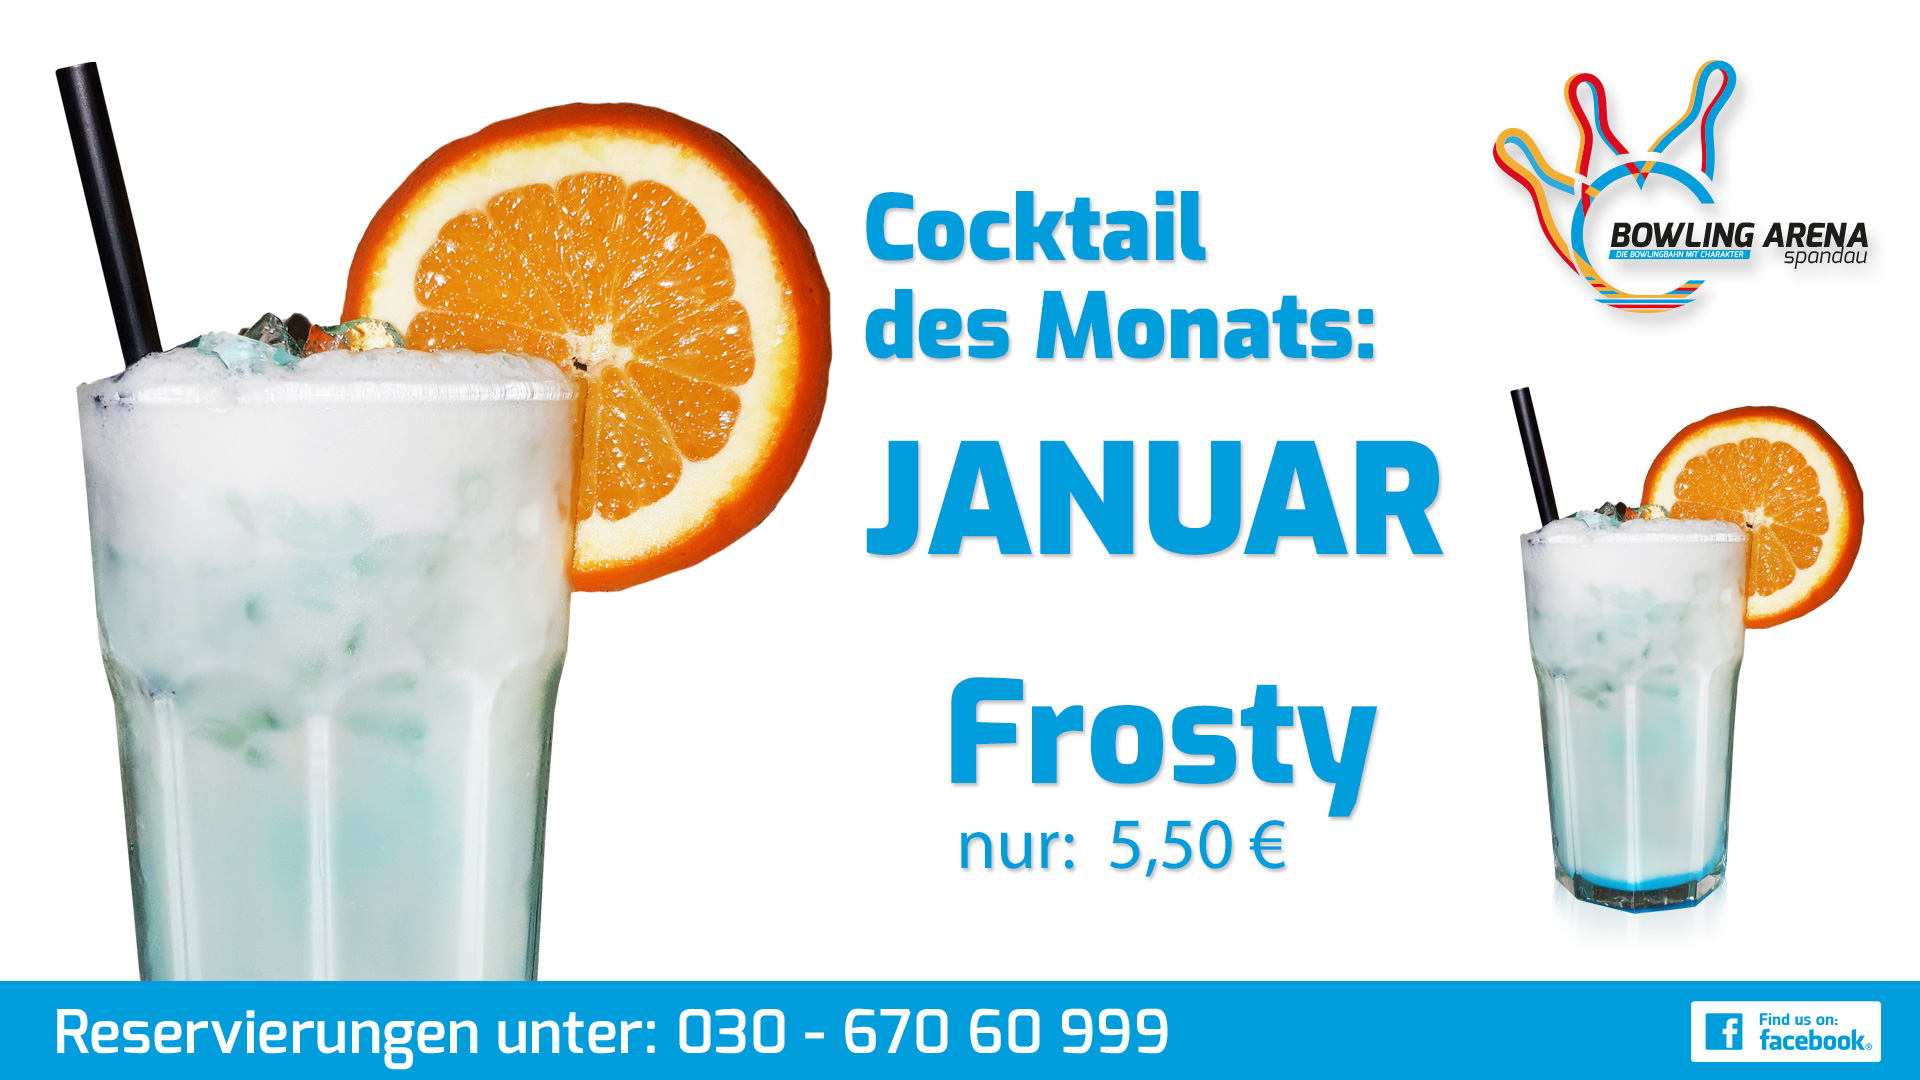 Cocktail des Monats in Berlin Spandau